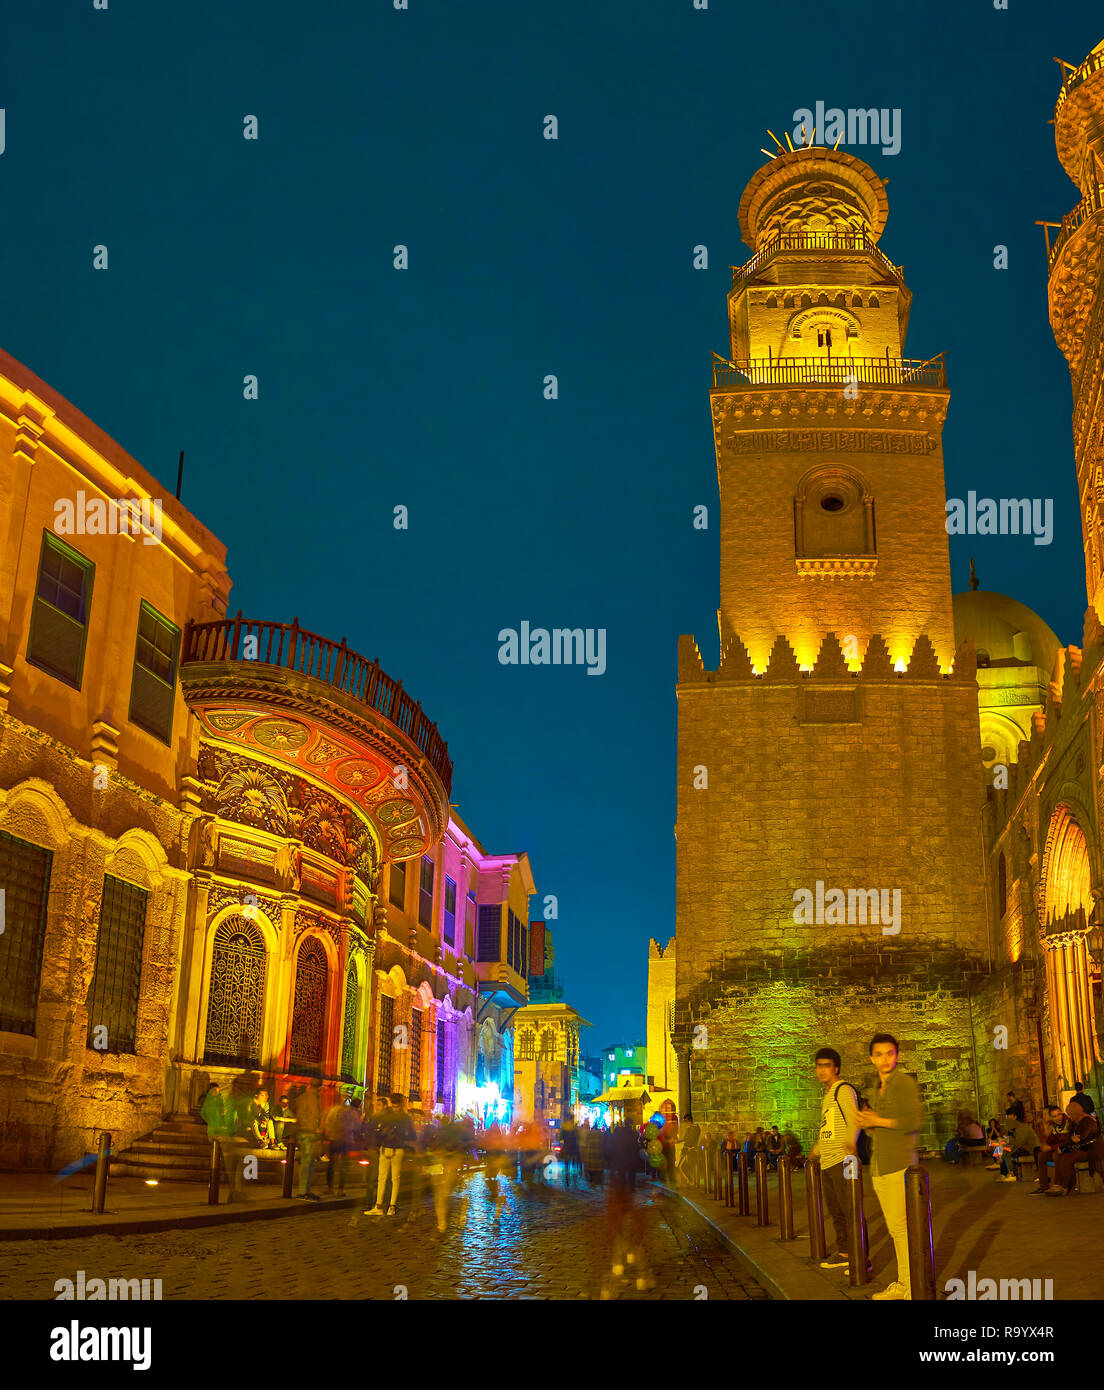 CAIRO, EGYPT - DECEMBER 20, 2017: The evening walk along popular Al-Muizz street and enjoy the bright illumination of medieval landmarks, on December  Stock Photo